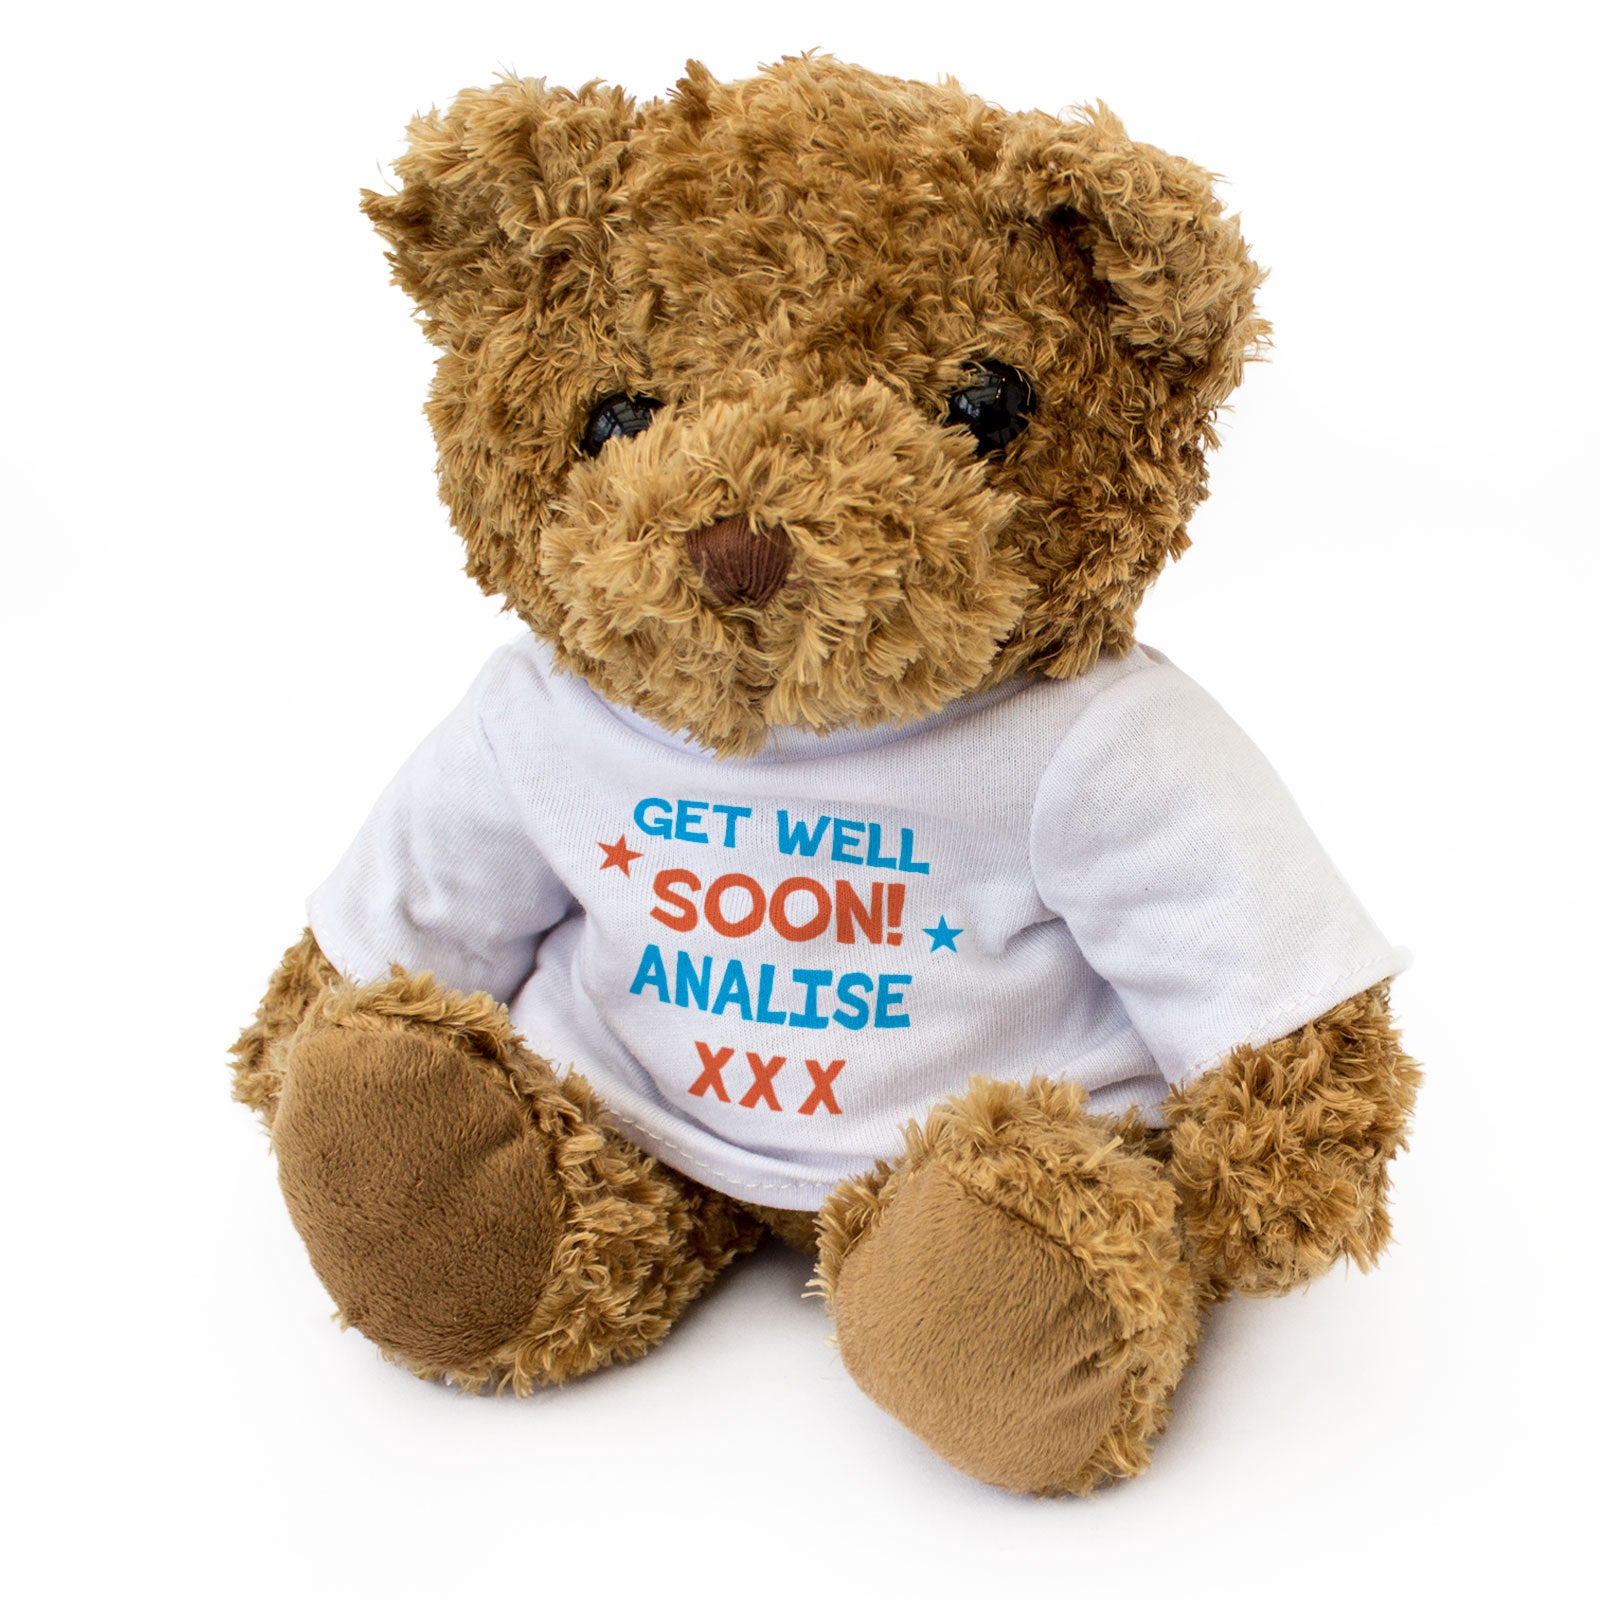 Get Well Soon Analise - Teddy Bear